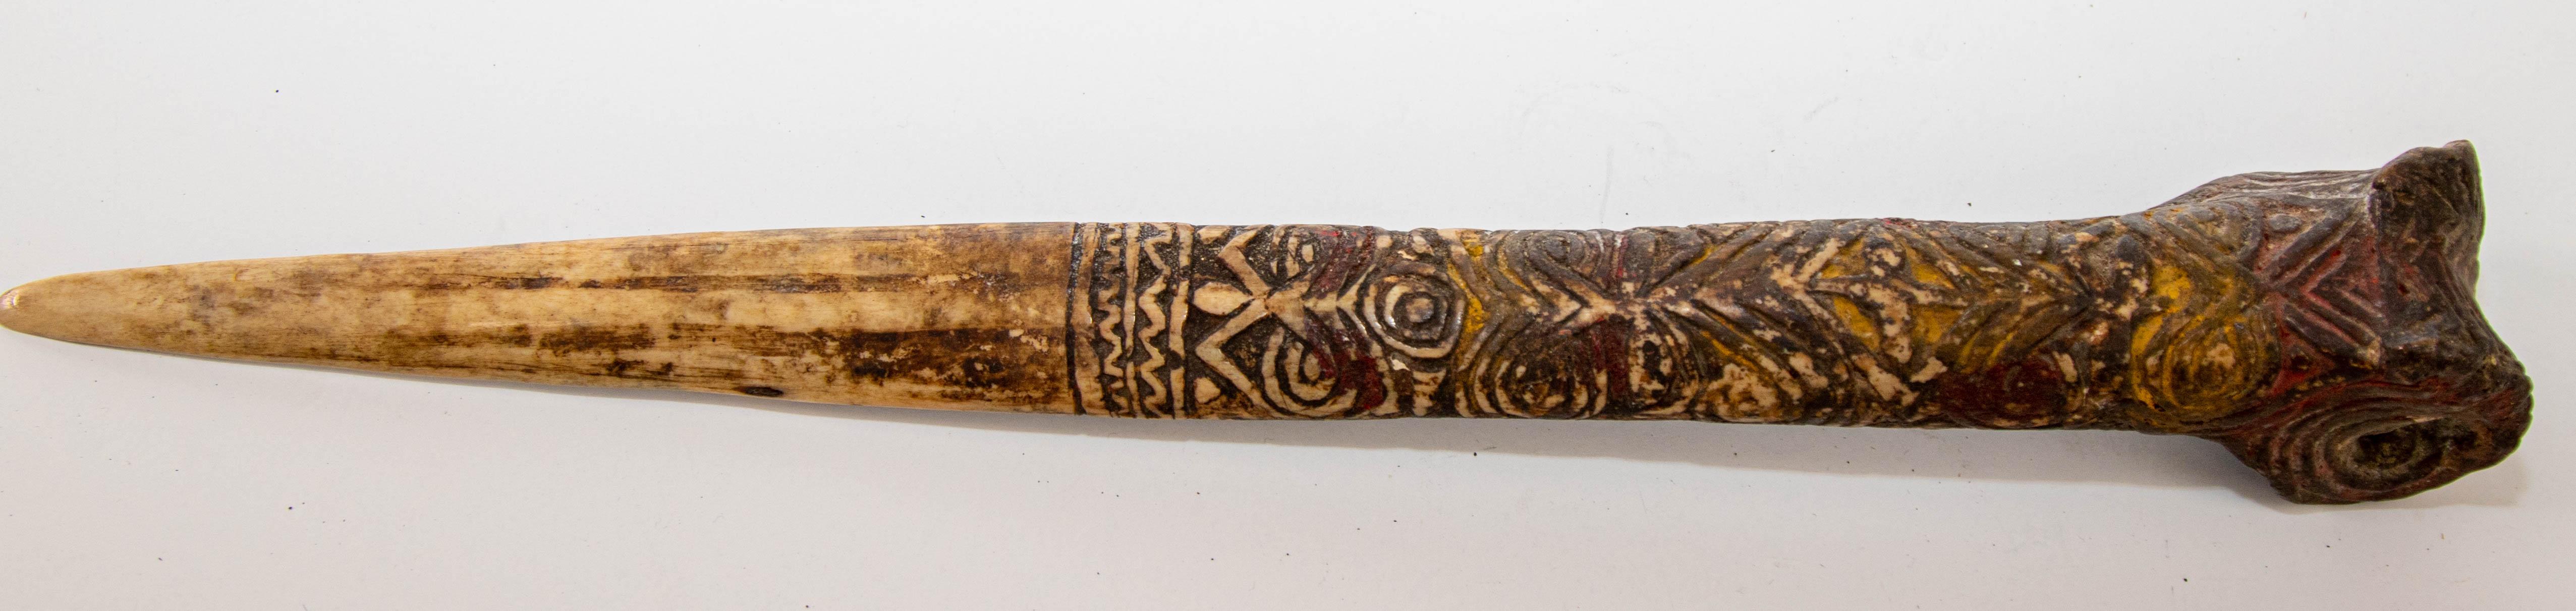 20th Century Antique Ethnic Artifact Sepik River Cassowary Bone from Papua New Guinea For Sale